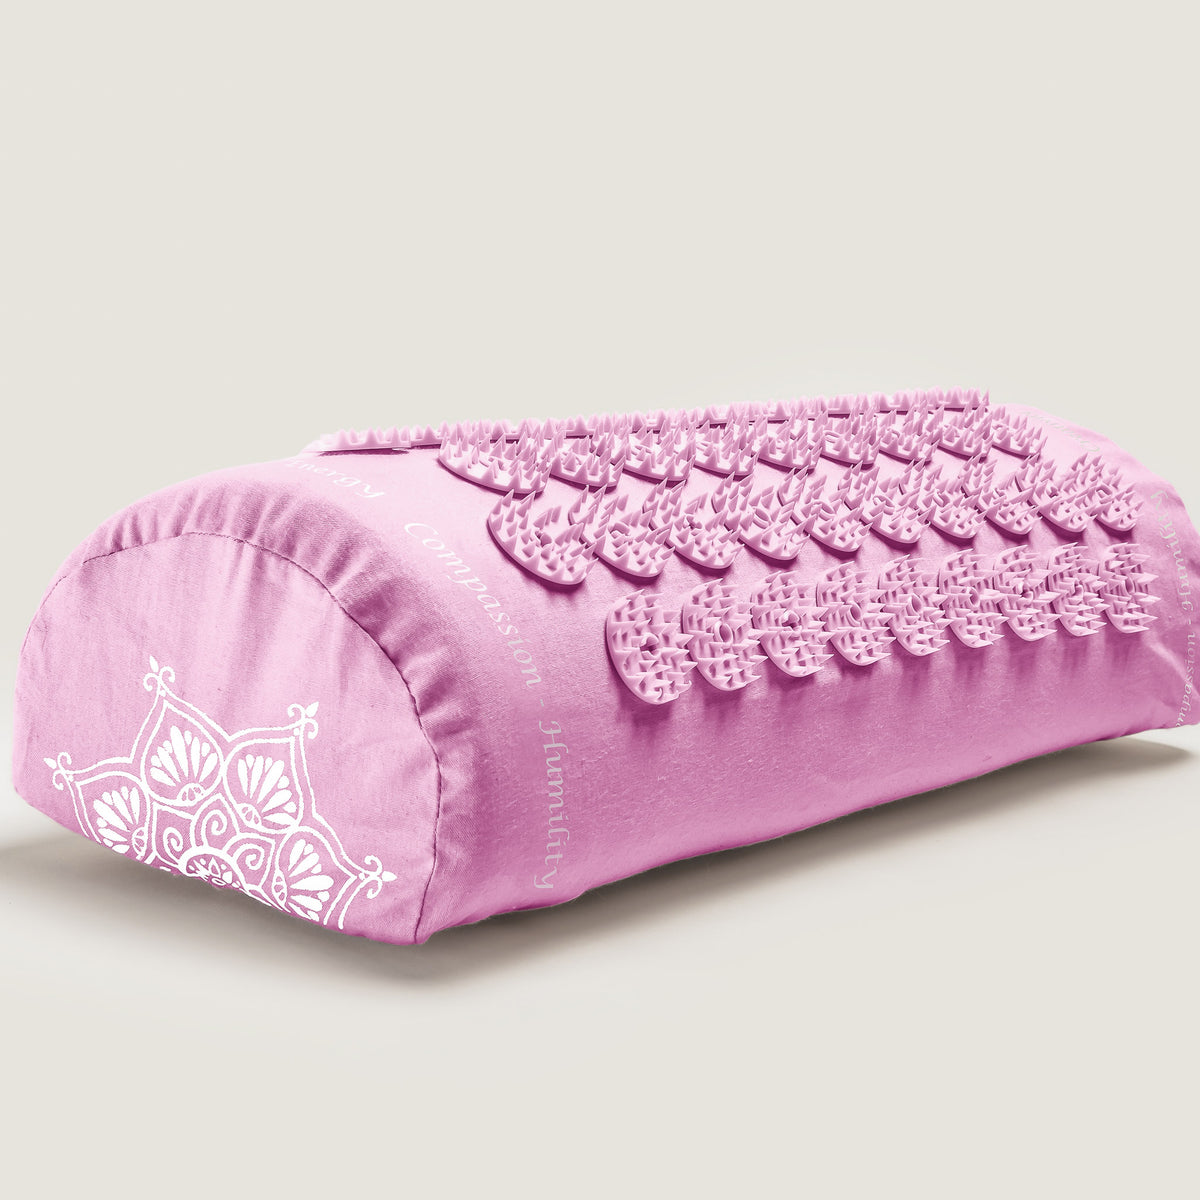 Shakti Acupressure Pillow - Pink